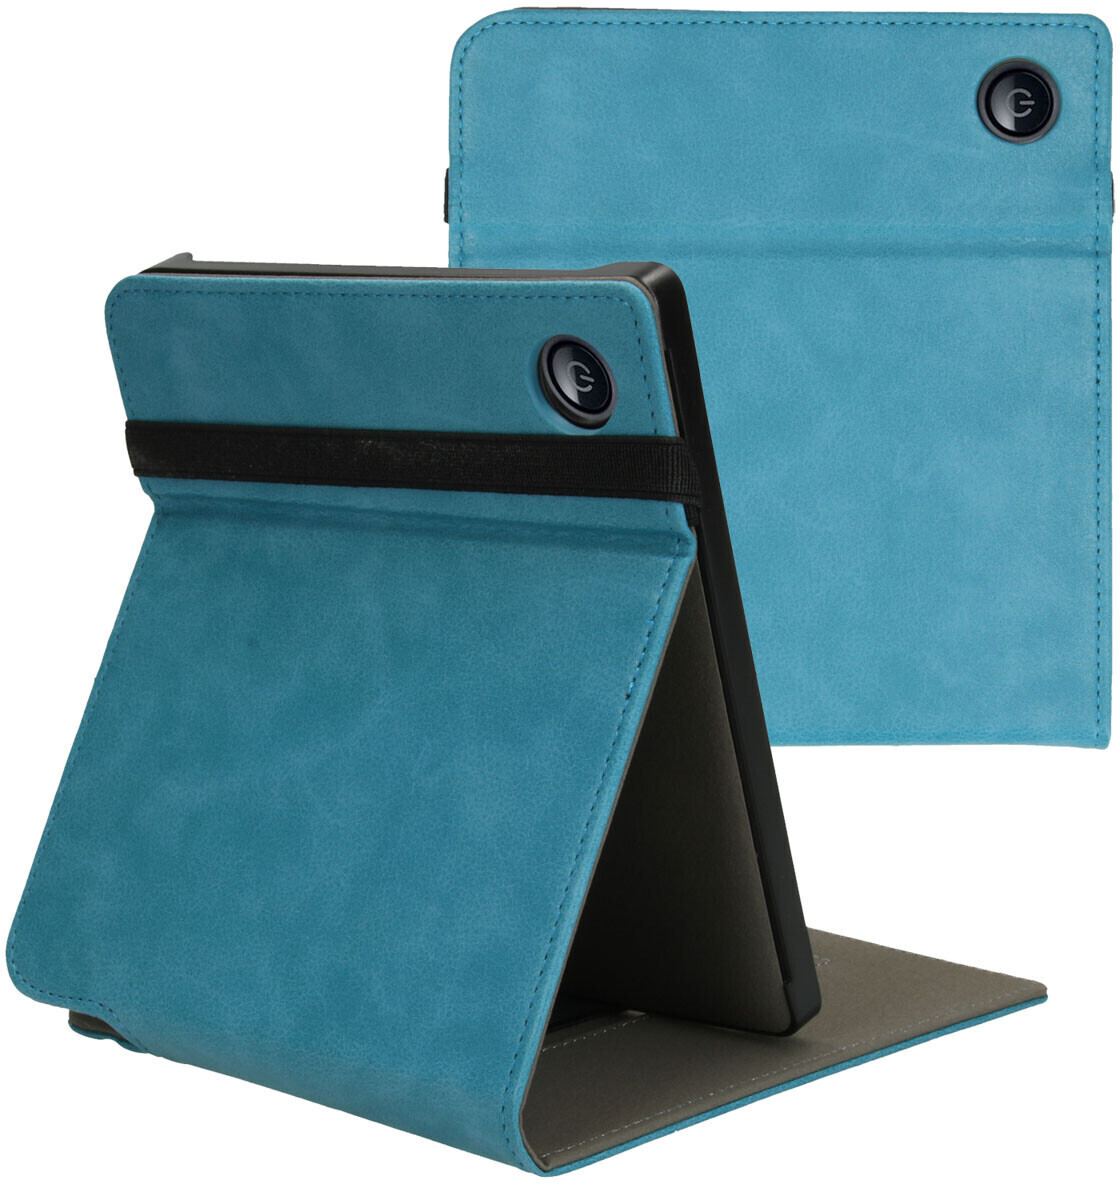 iMoshion Étui de liseuse portefeuille design Pliable pour Kobo Libra 2 /  Tolino Vision 6 - Floral Green